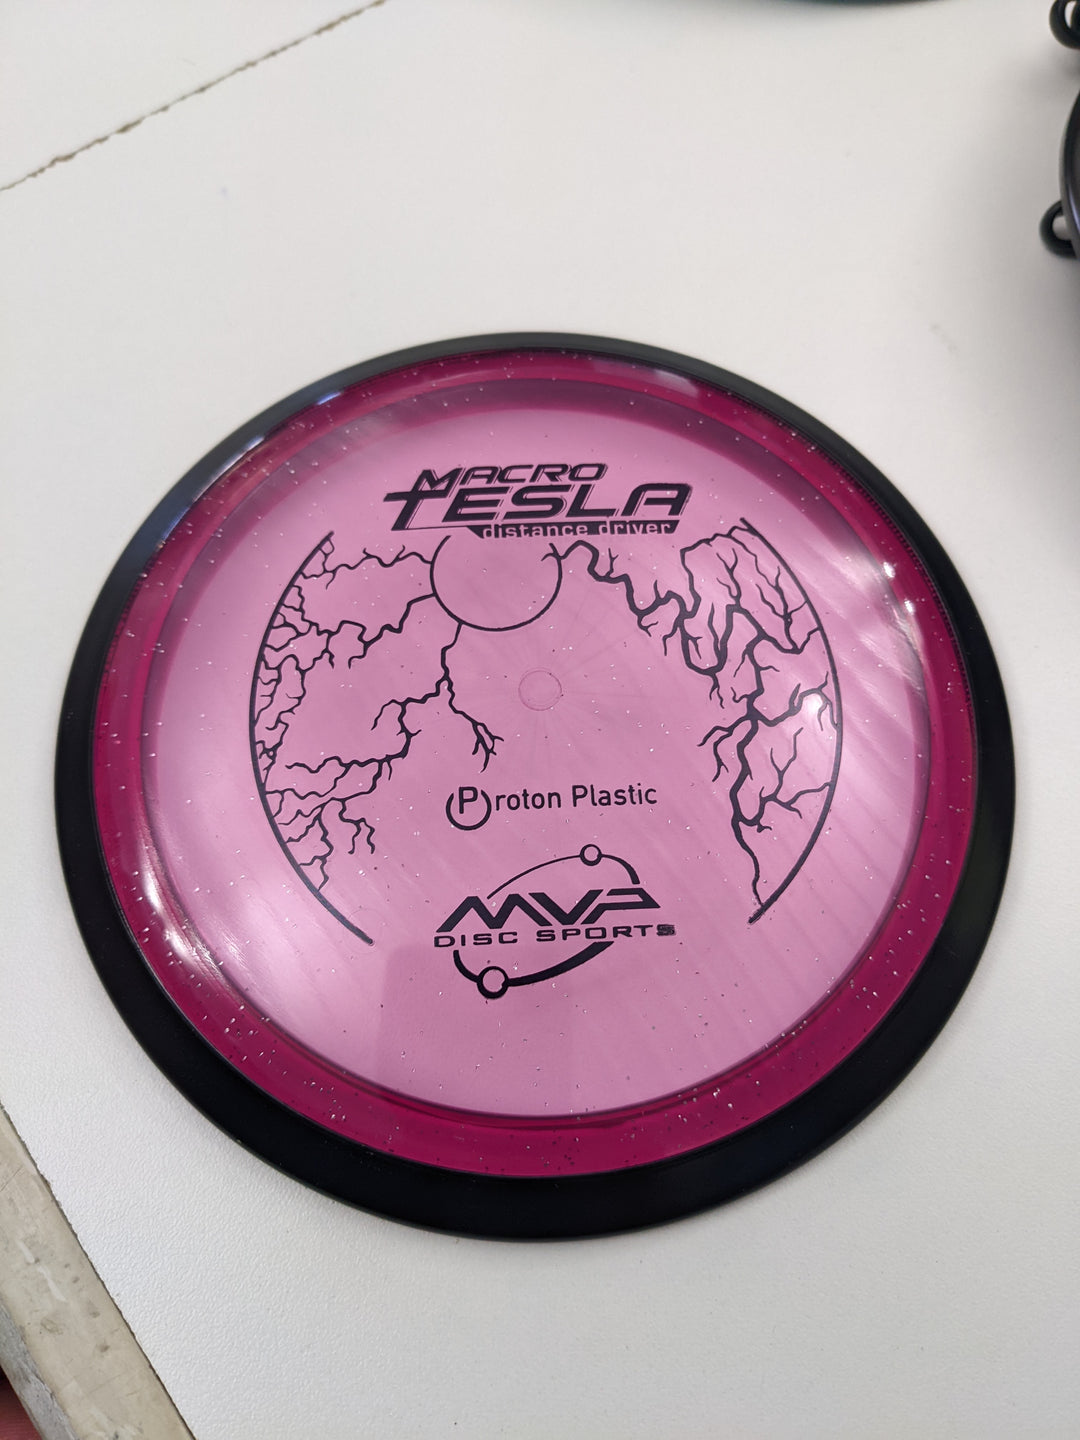 MVP Macro Tesla Proton Mini